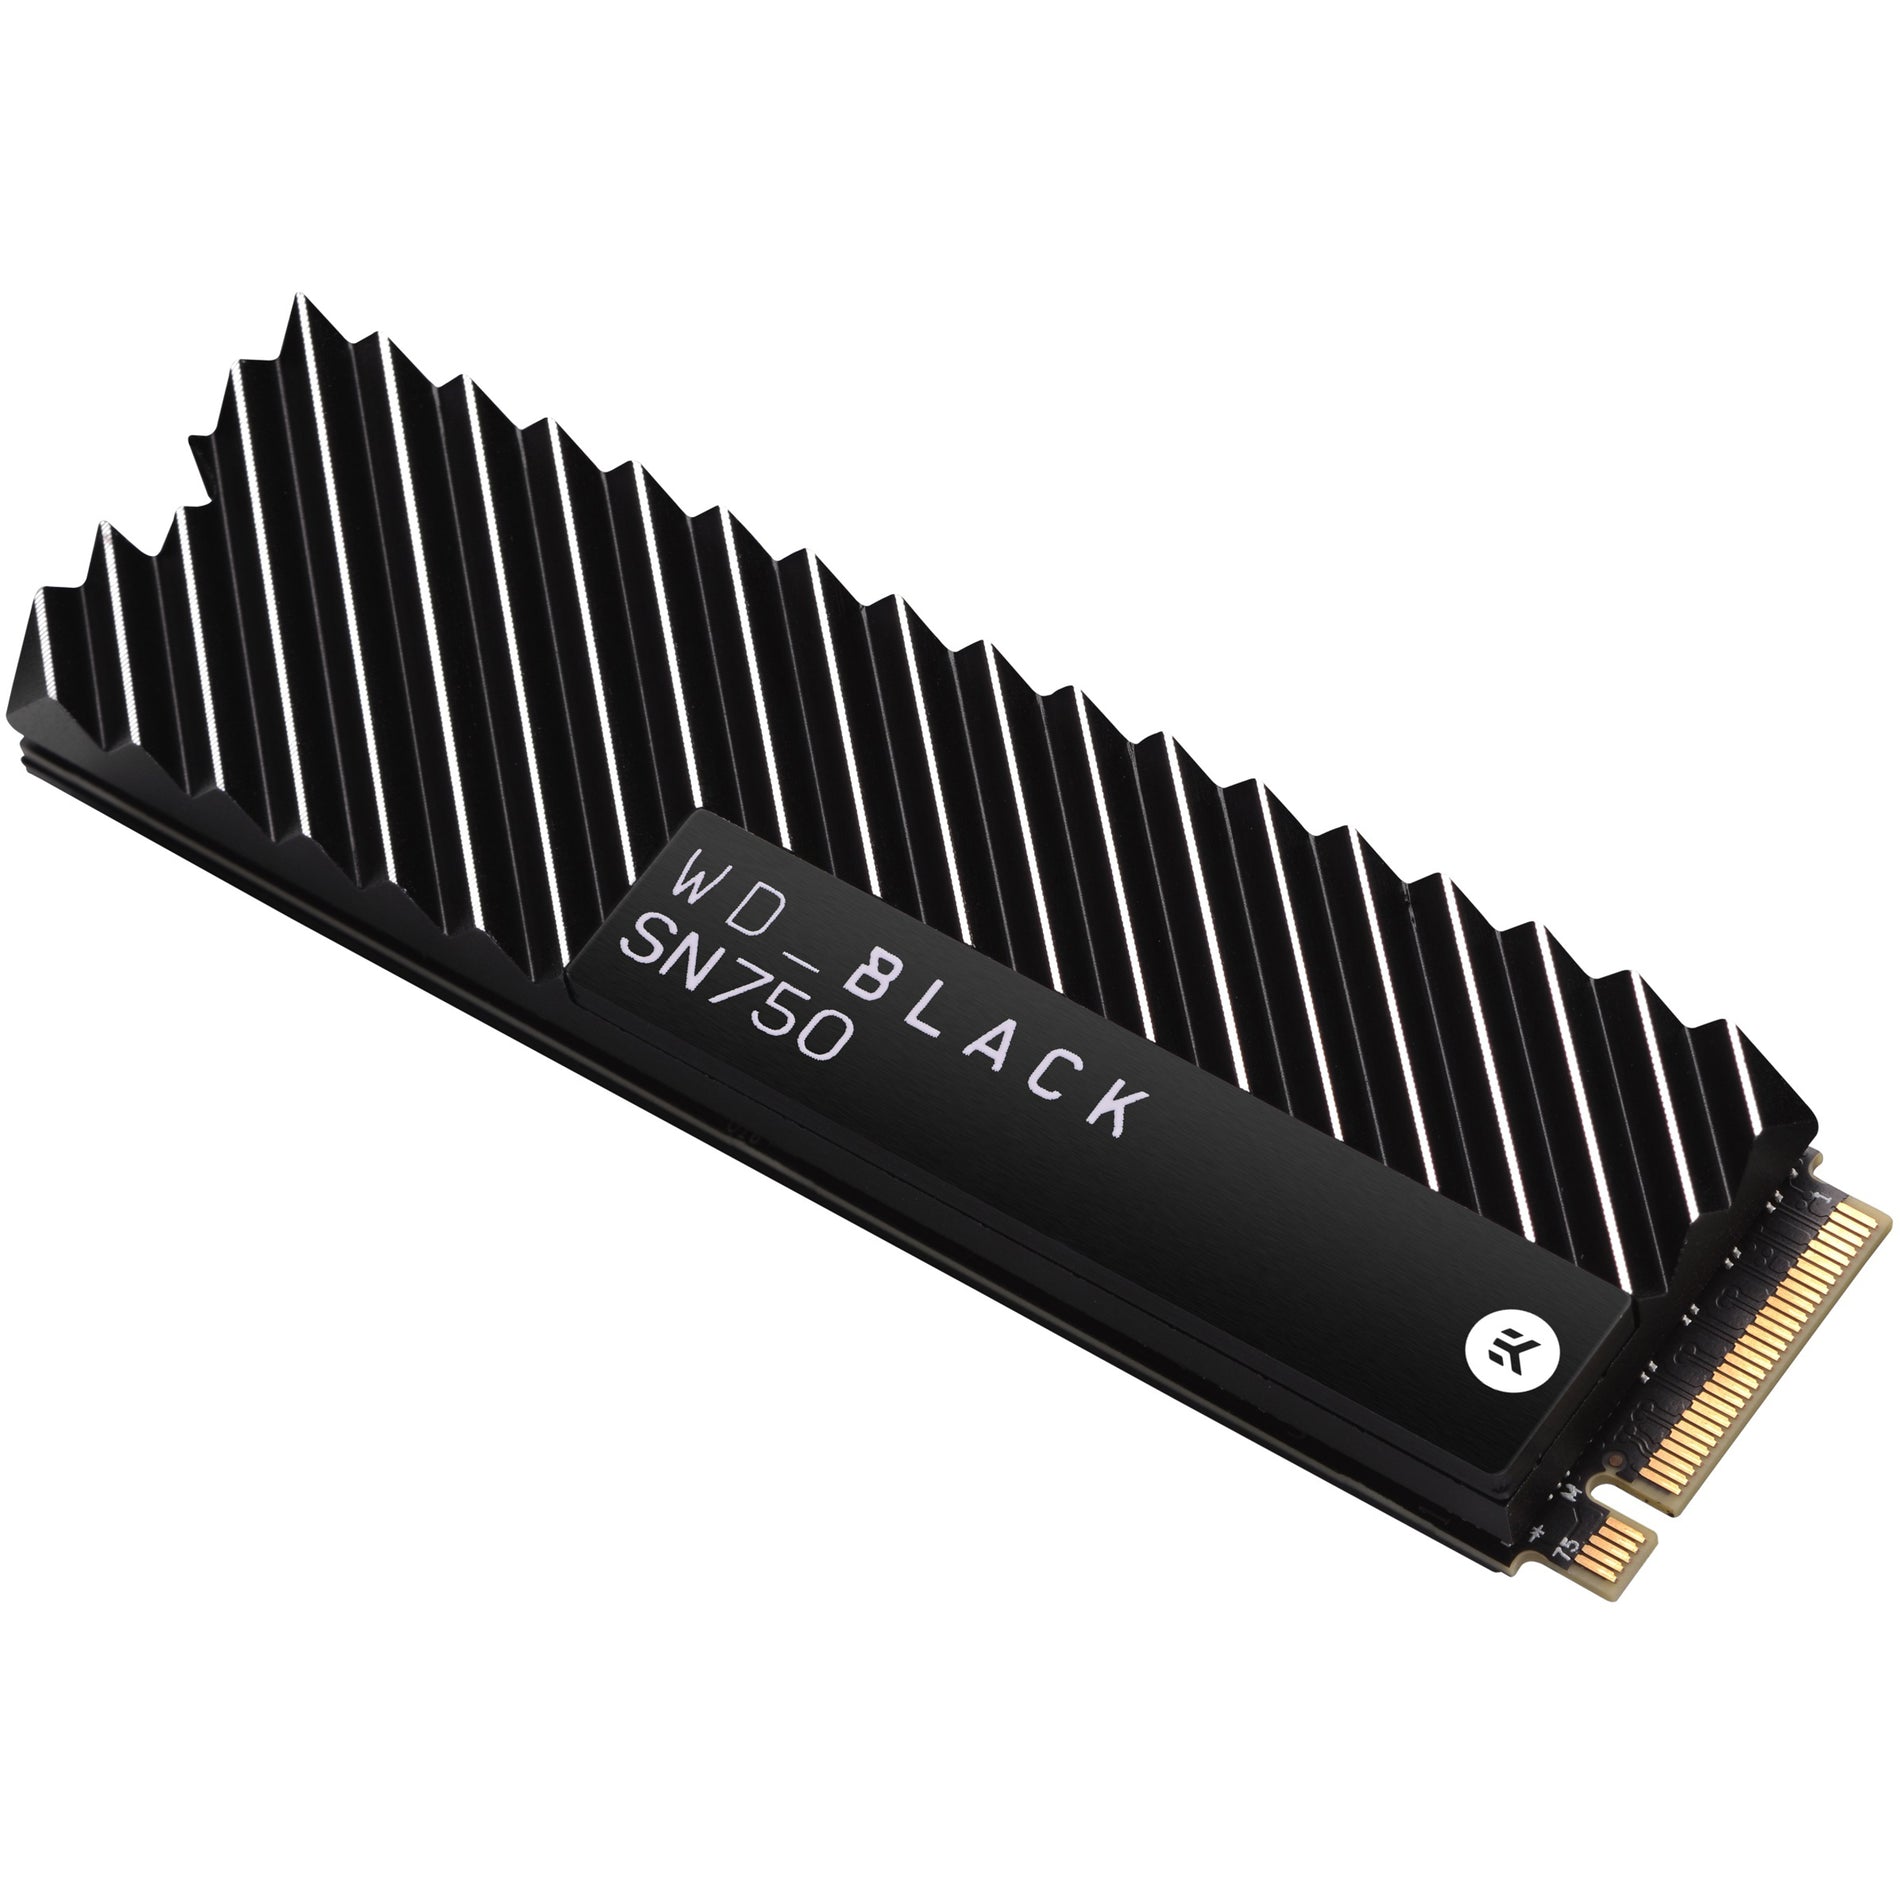 Western Digital WDS500G3XHC Black SN750 NVMe SSD With Heatsink, 500GB, PCIe 3.0 x4, 5 Year Warranty